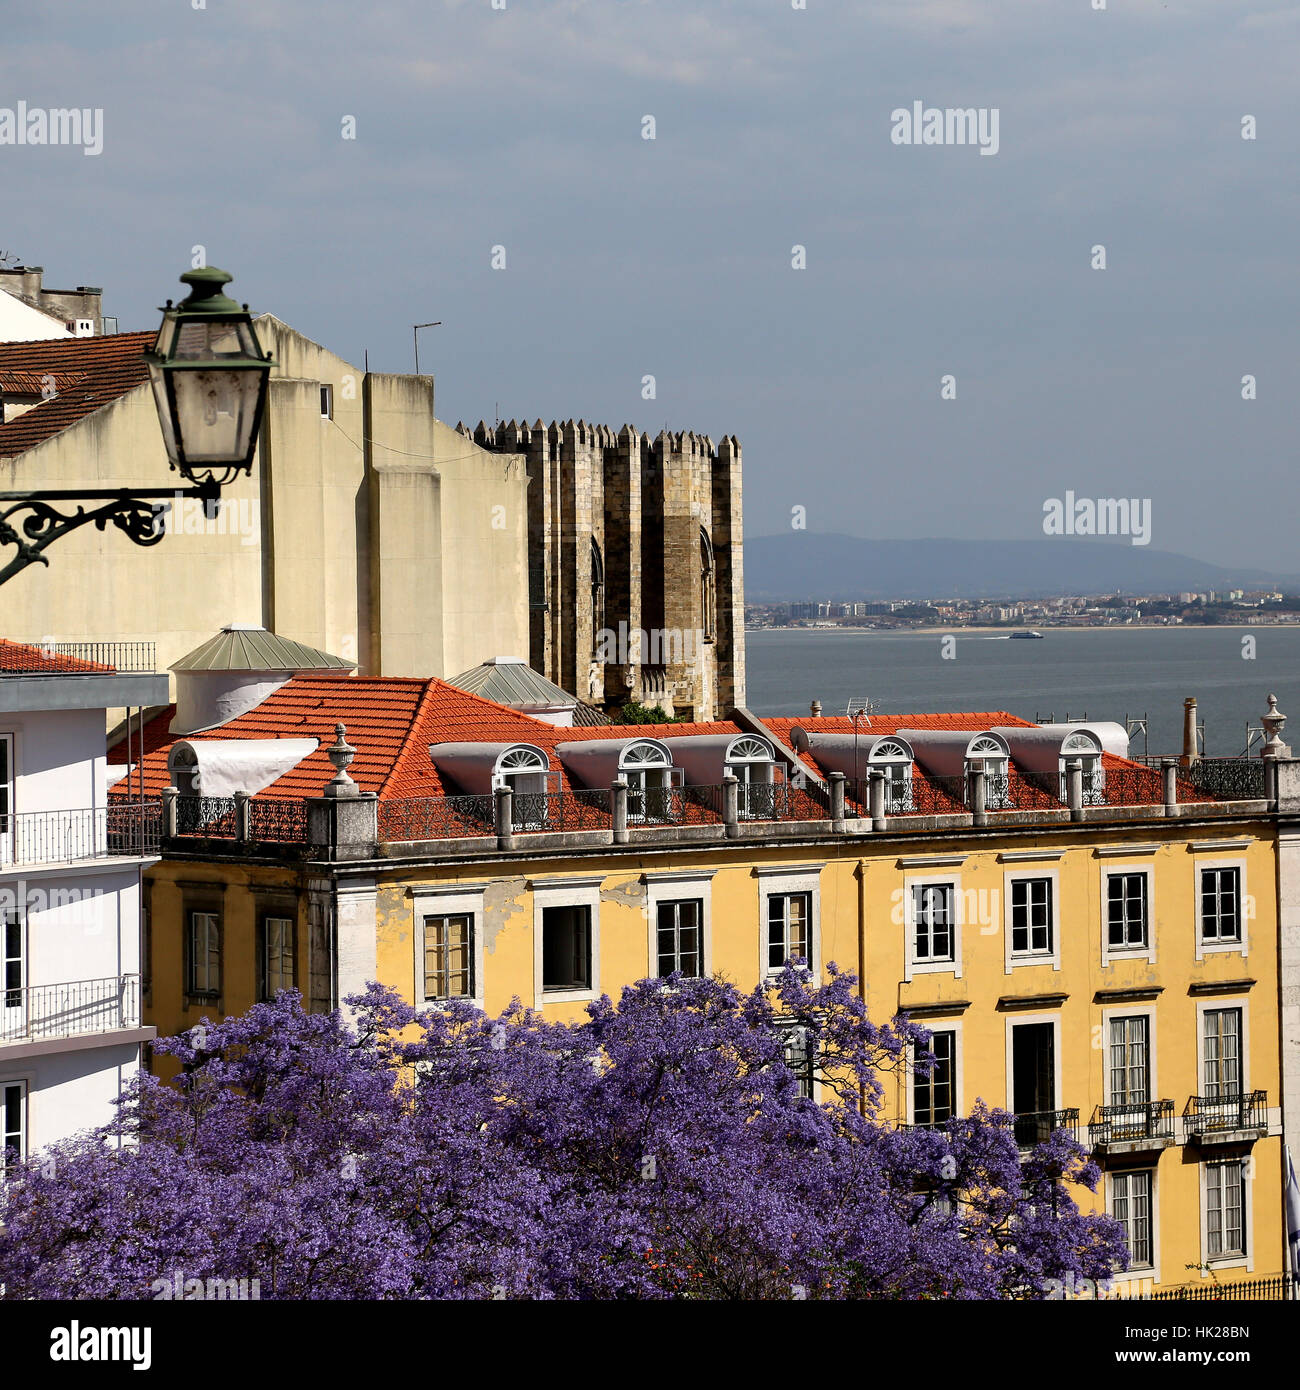 Images of Lisbon, Portugal. Lisbon architecture and landmarks. Stock Photo